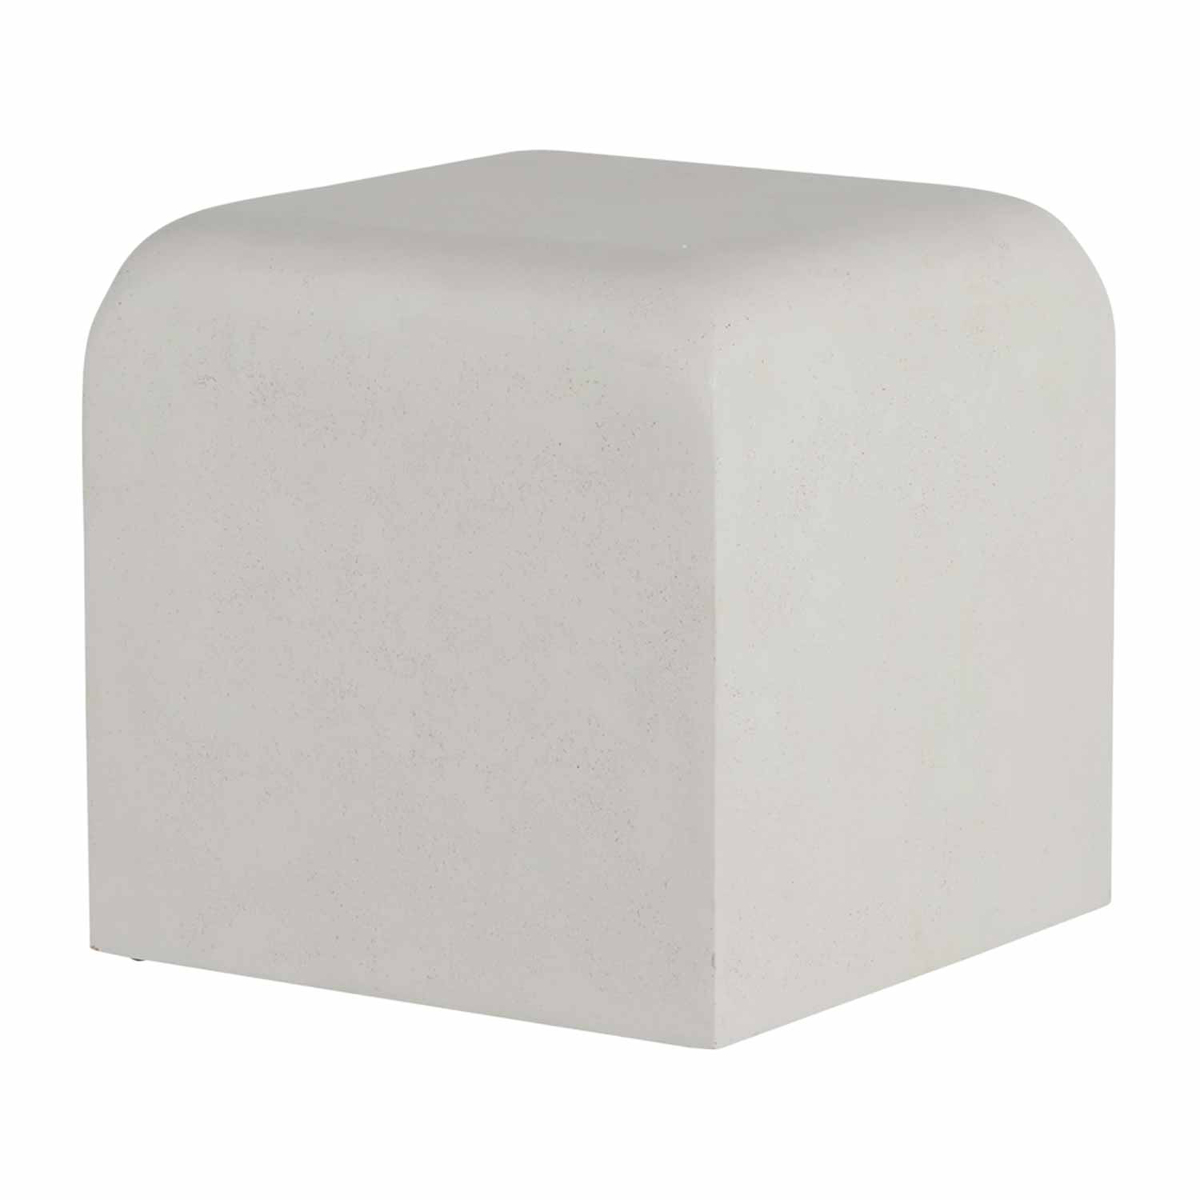 grebe stool product image